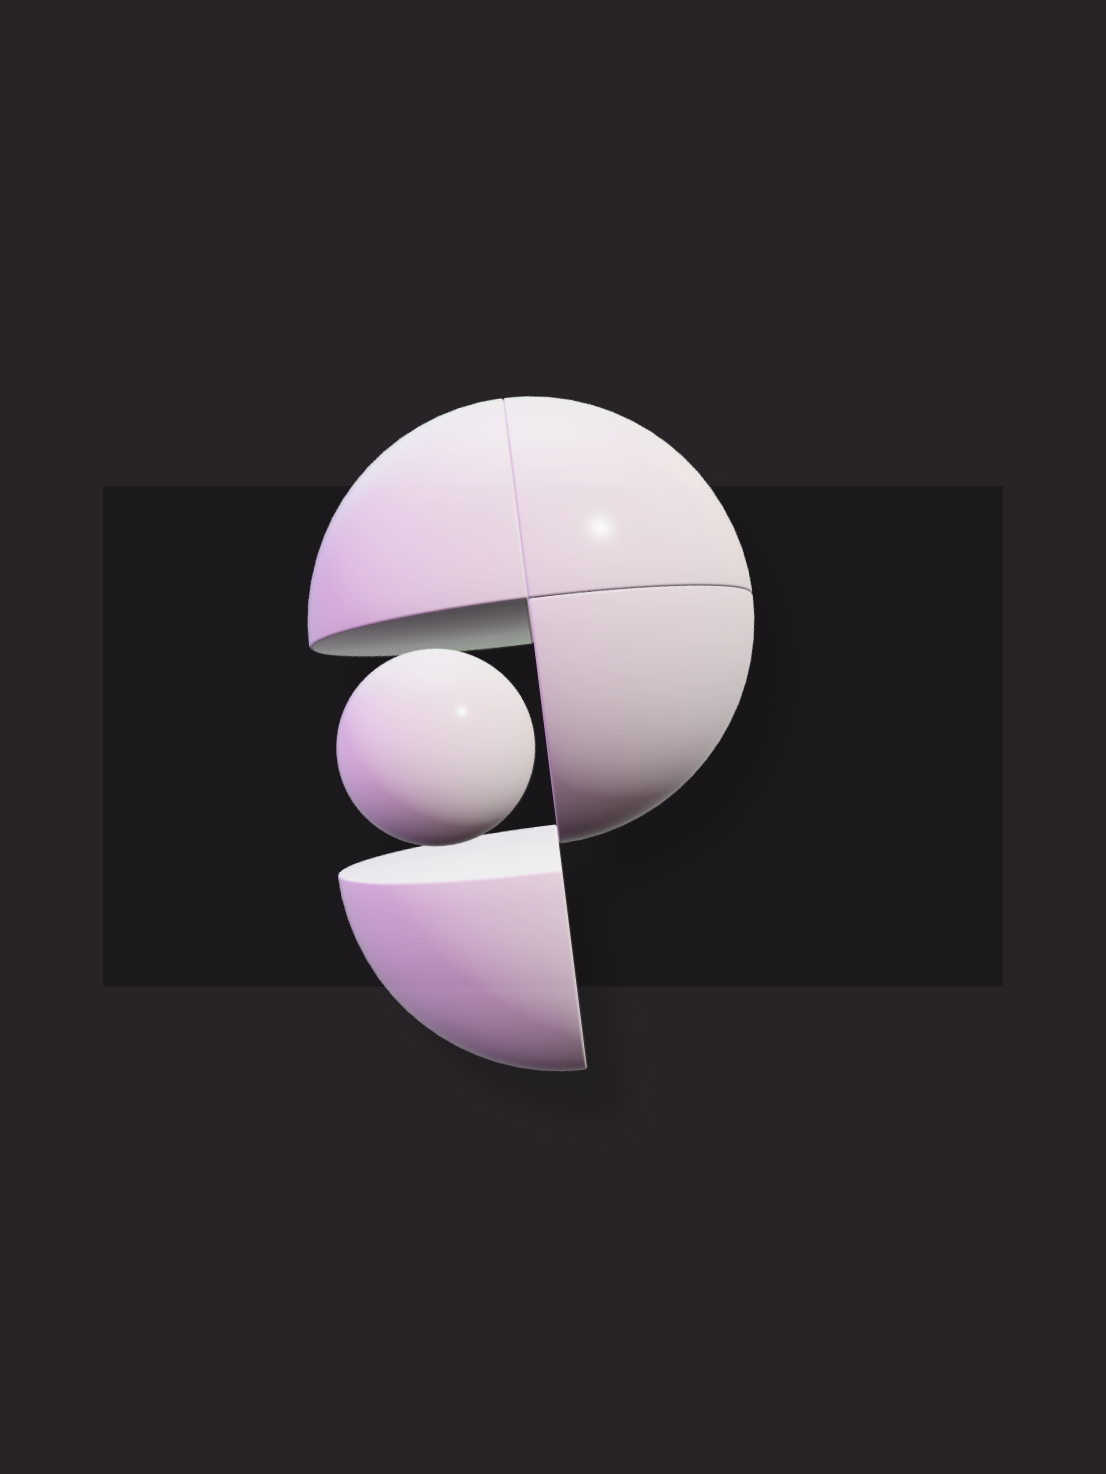 Pluto logo in 3D